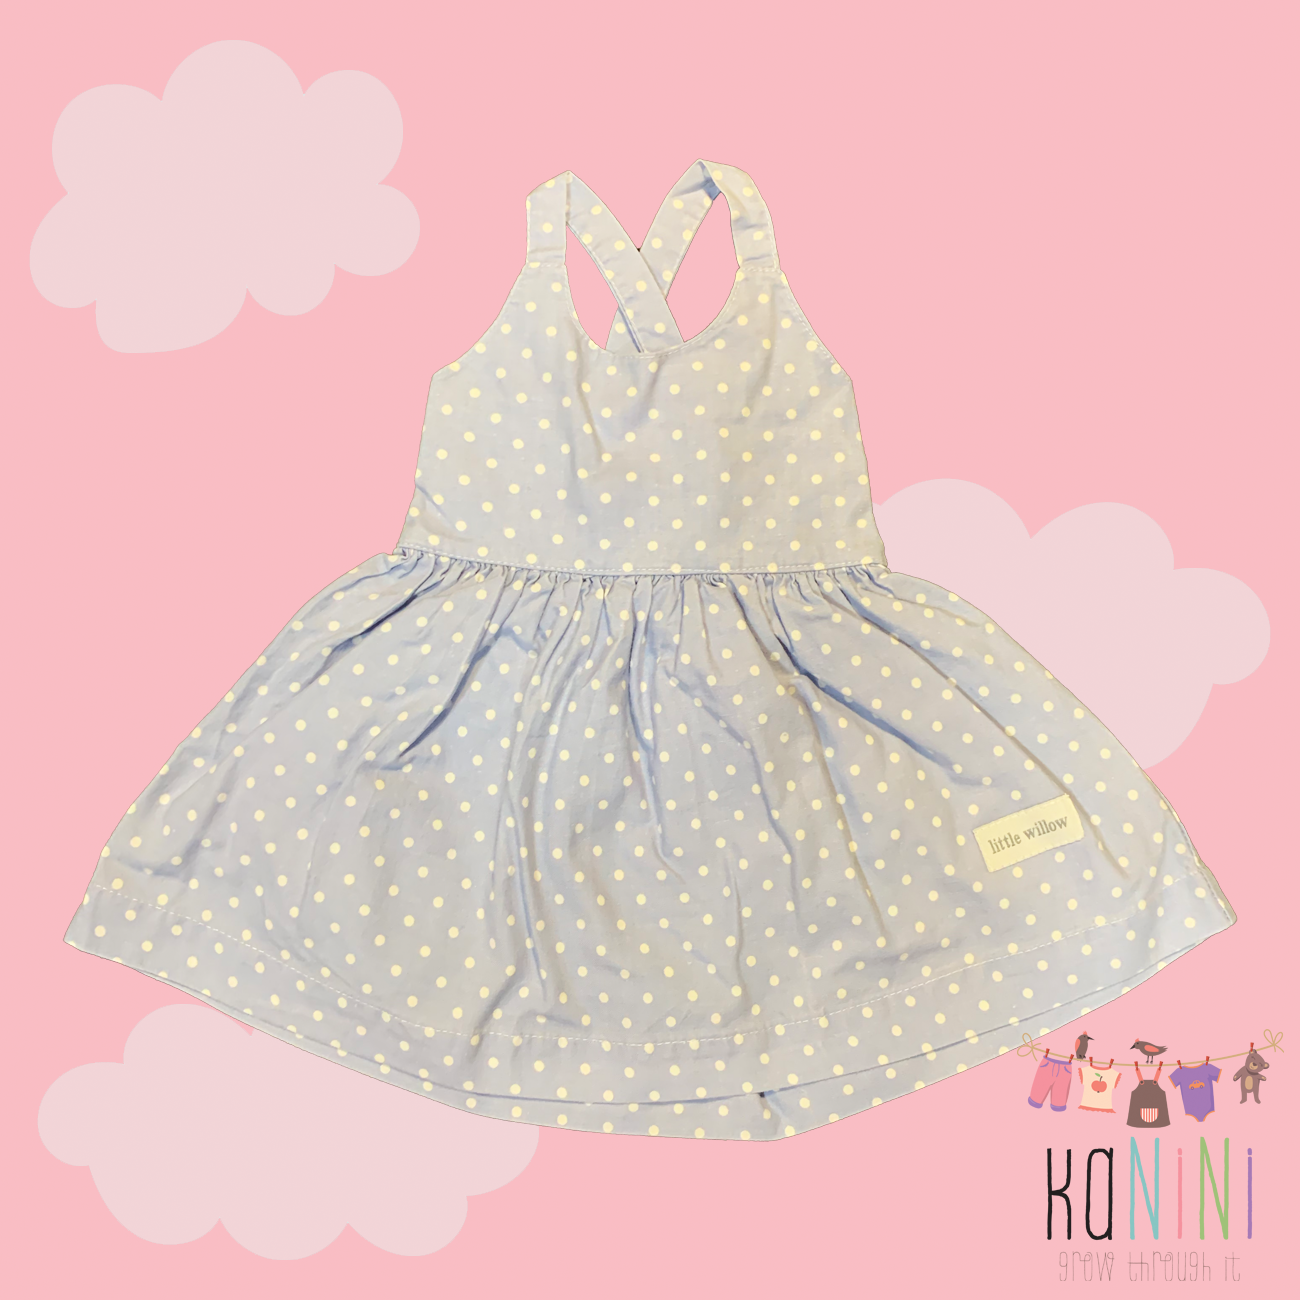 Featured image for “Little Willow 3 - 6 Months Girls Polkadot Dress”